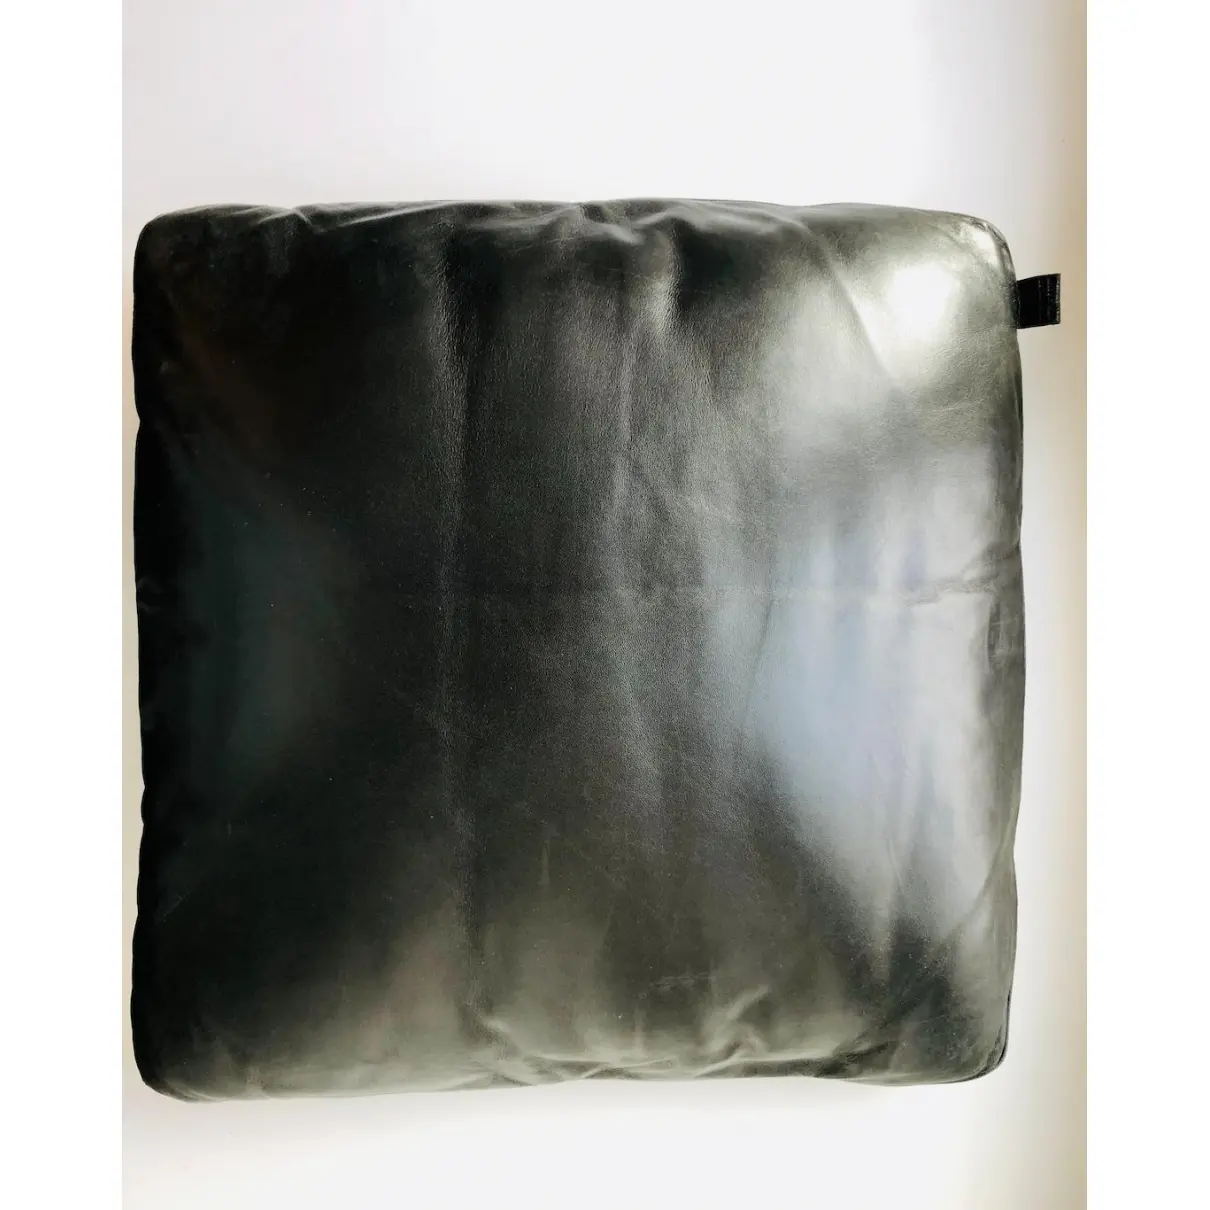 Buy Hermès Leather cushion online - Vintage